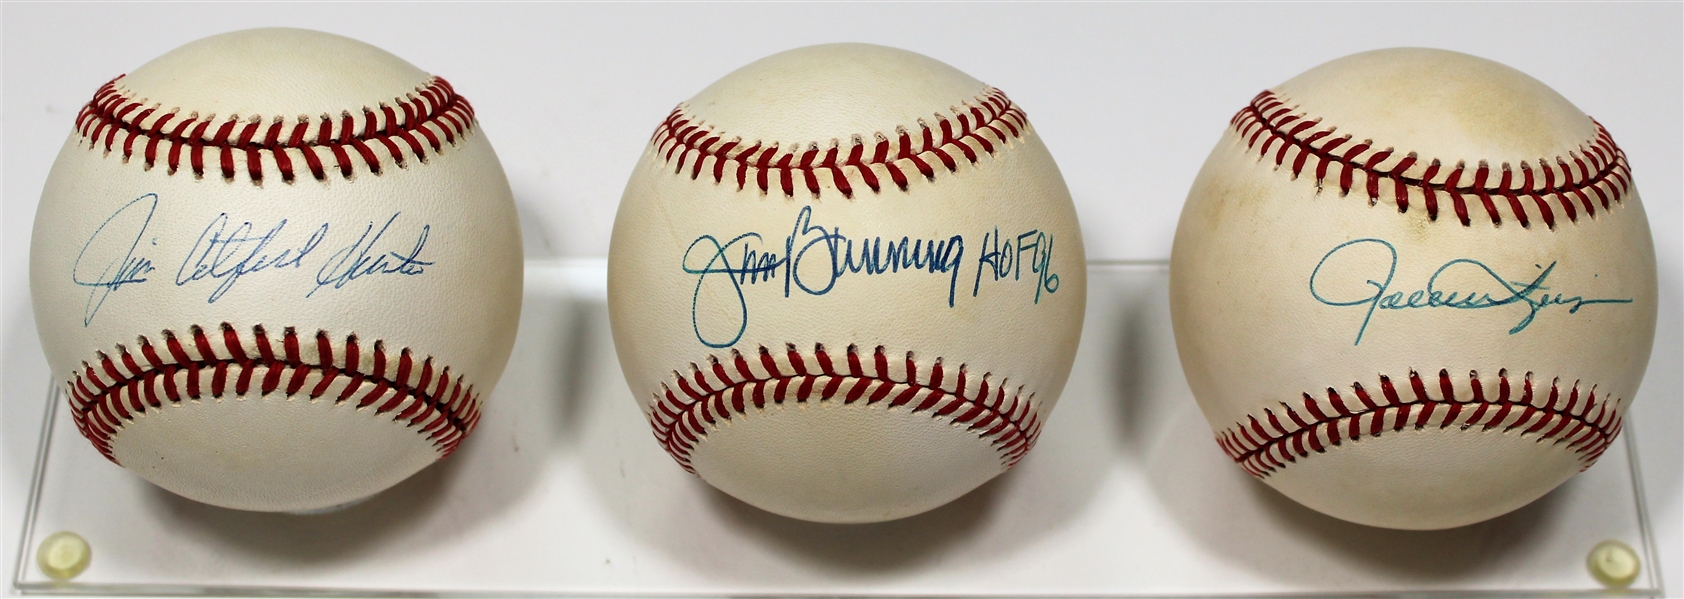 Jim "Catfish" Hunter - Rollie Fingers - John Bunning Signed Baseballs - JSA